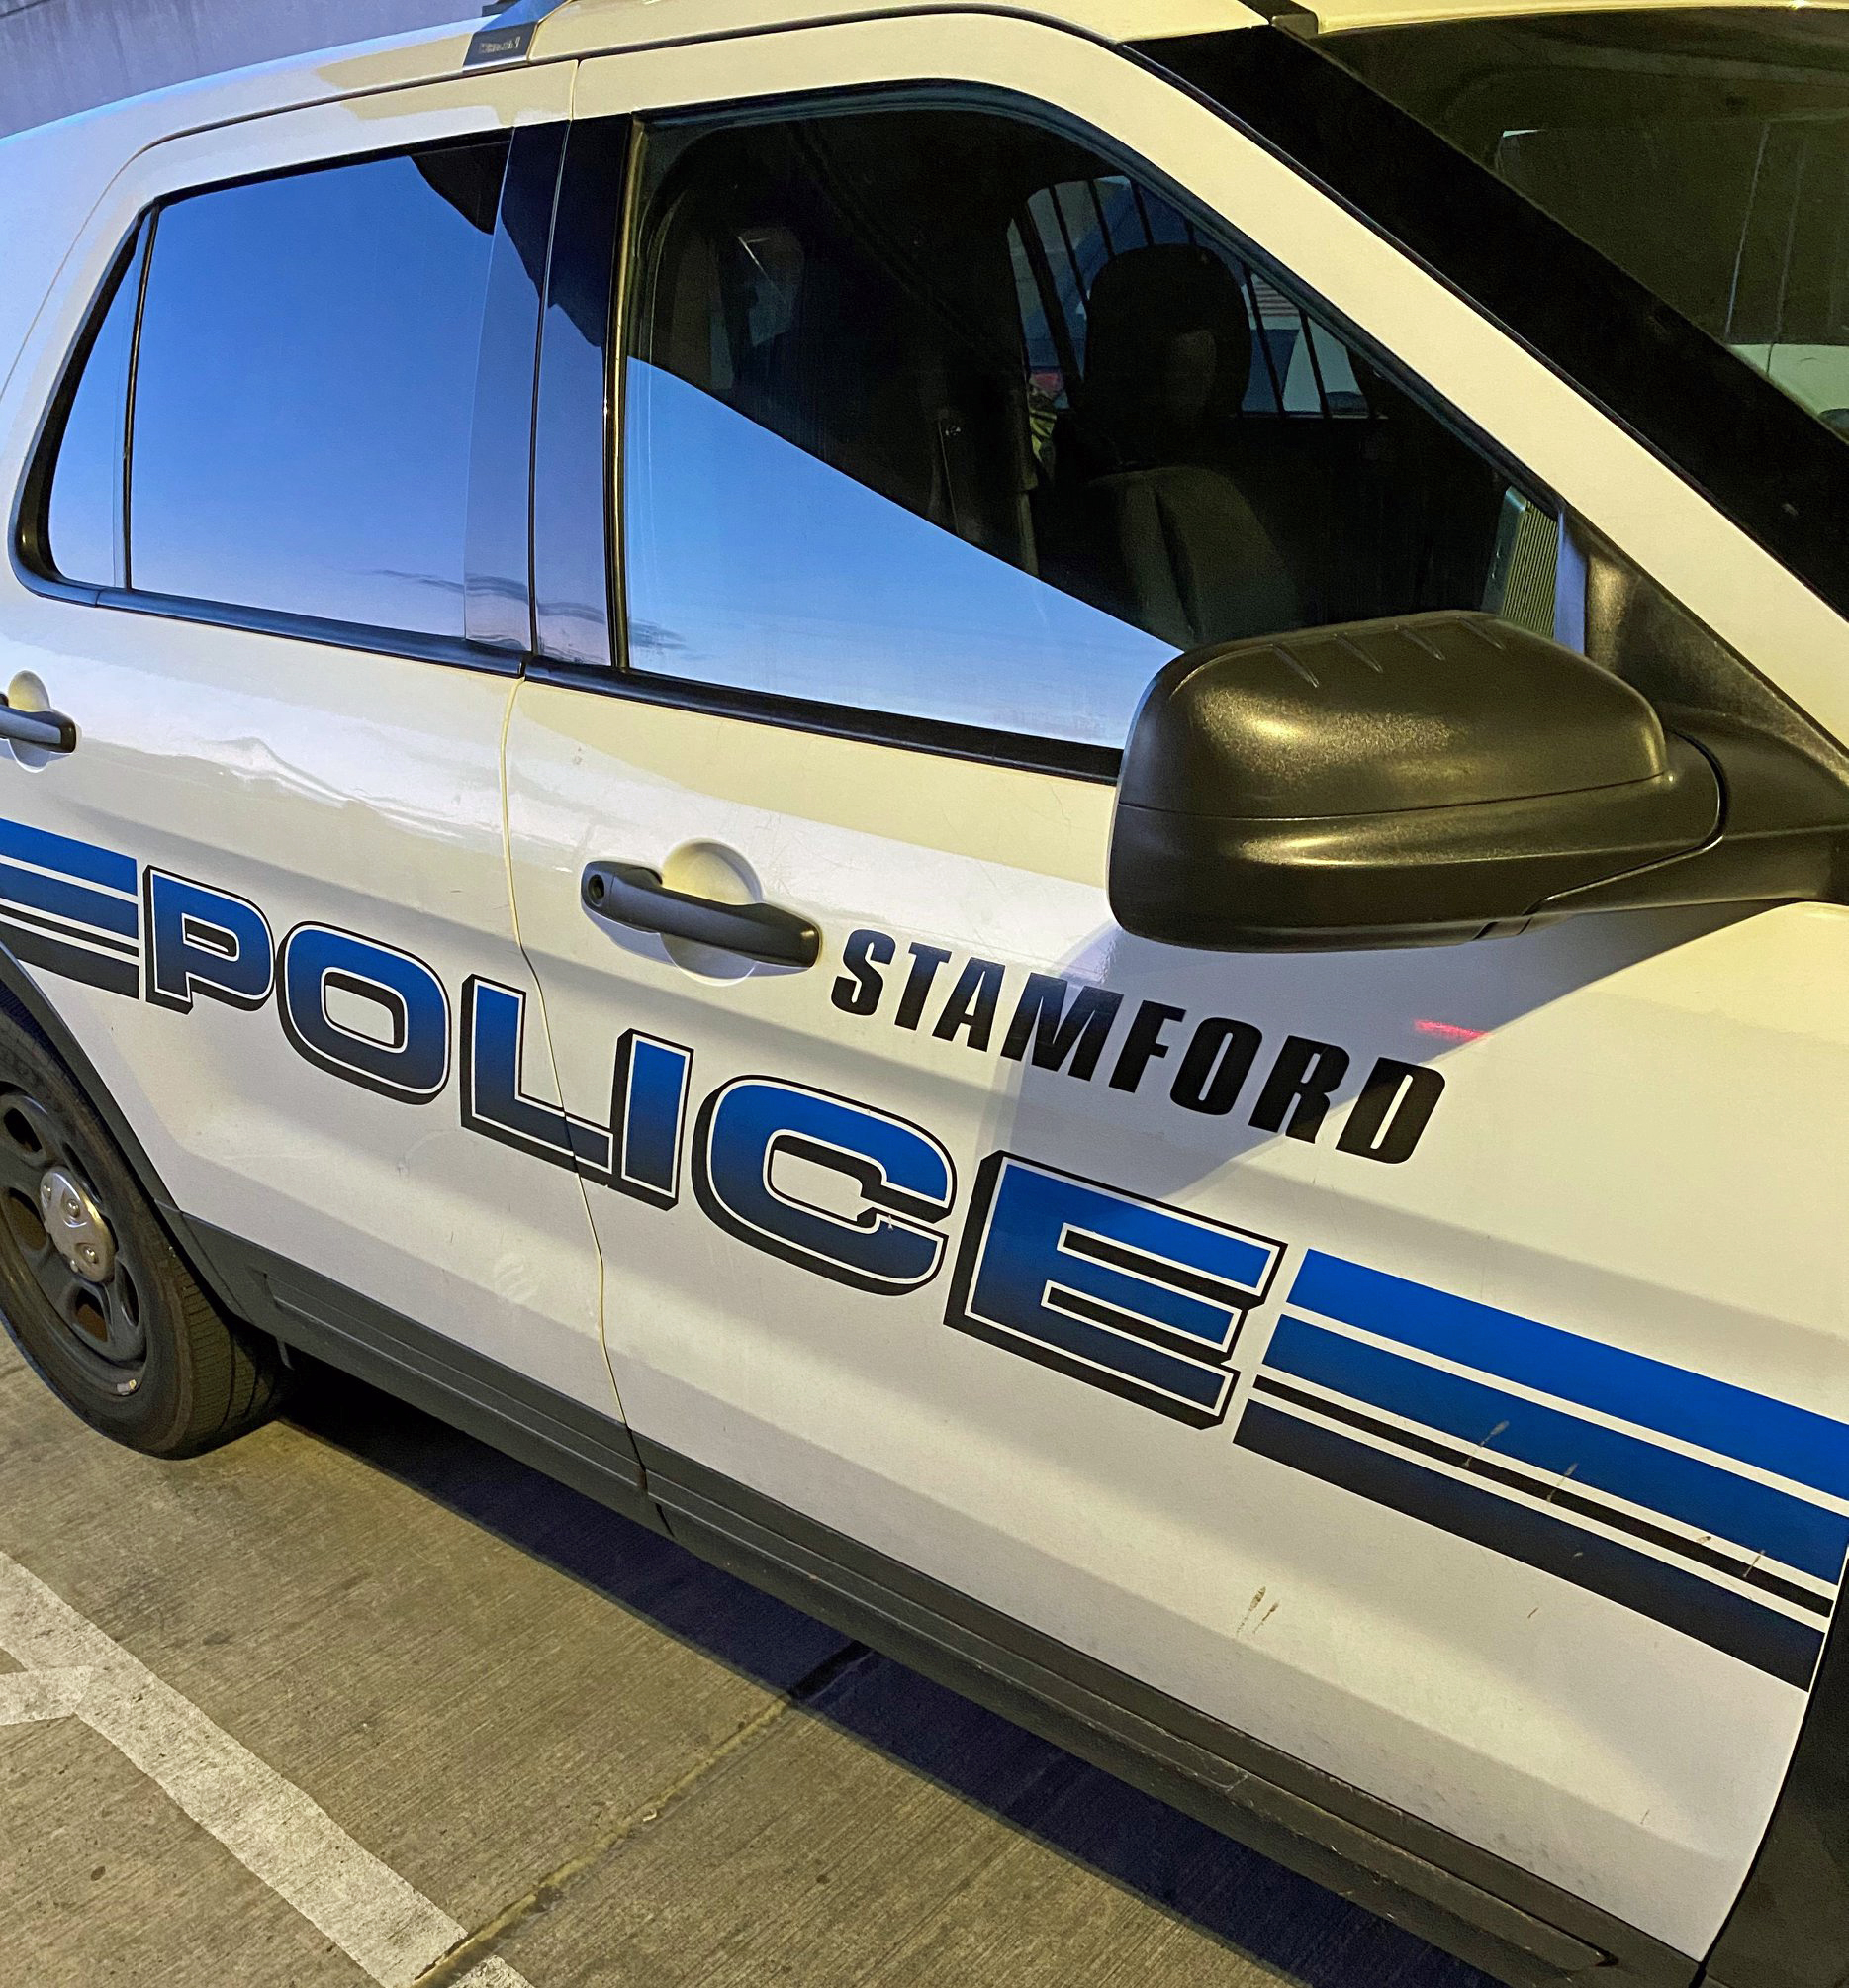 Person shot during drug deal outside Stamford health center